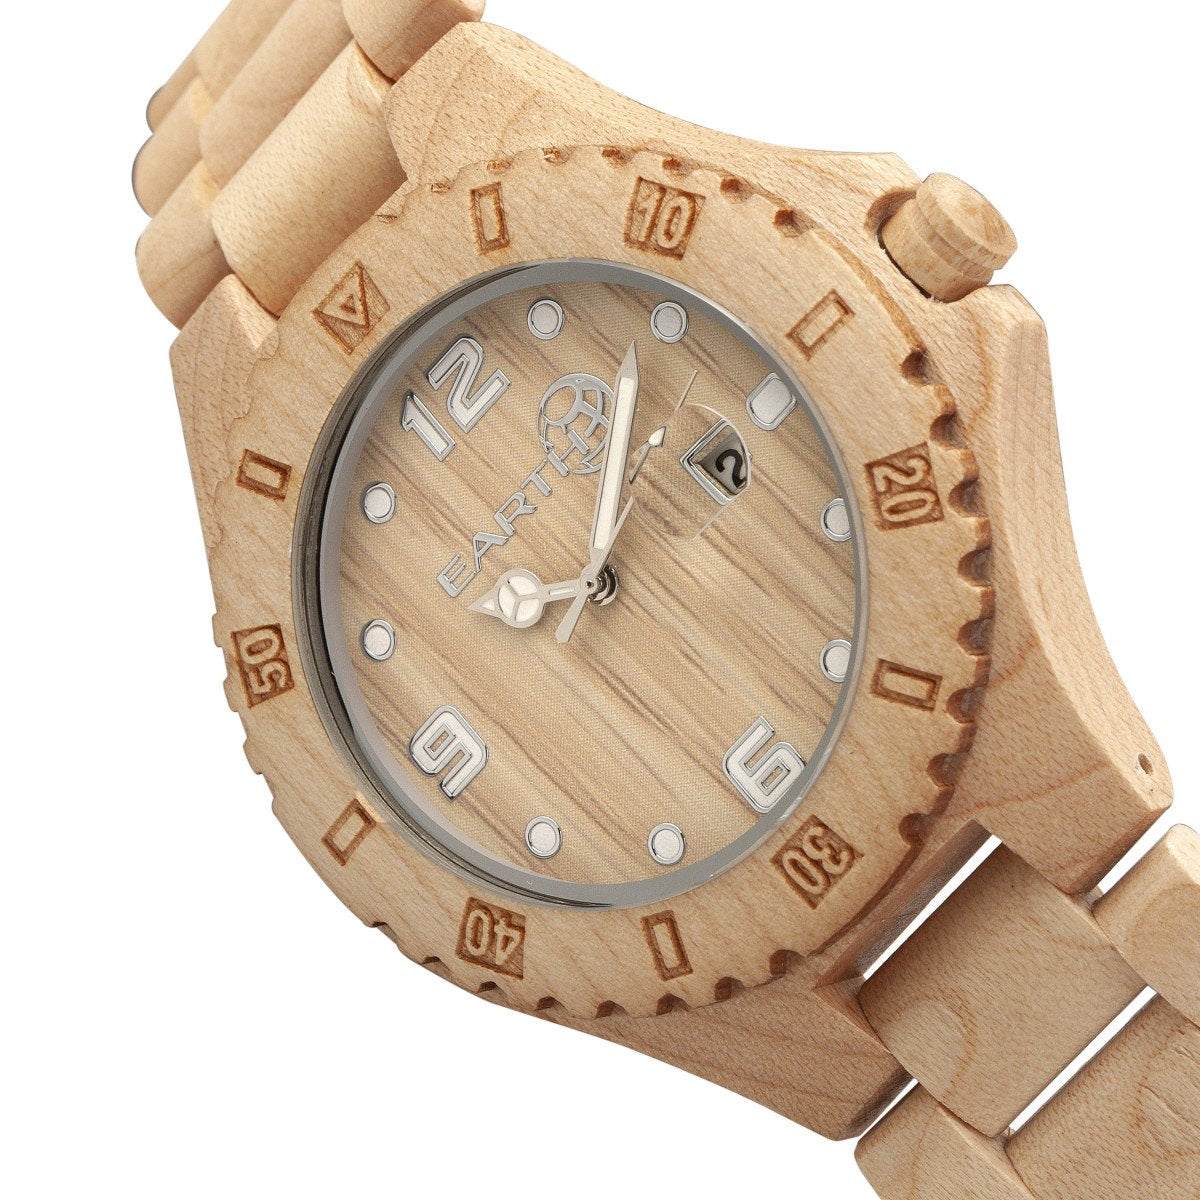 Earth Wood Raywood Bracelet Watch w/Date - Khaki/Tan - ETHEW1701